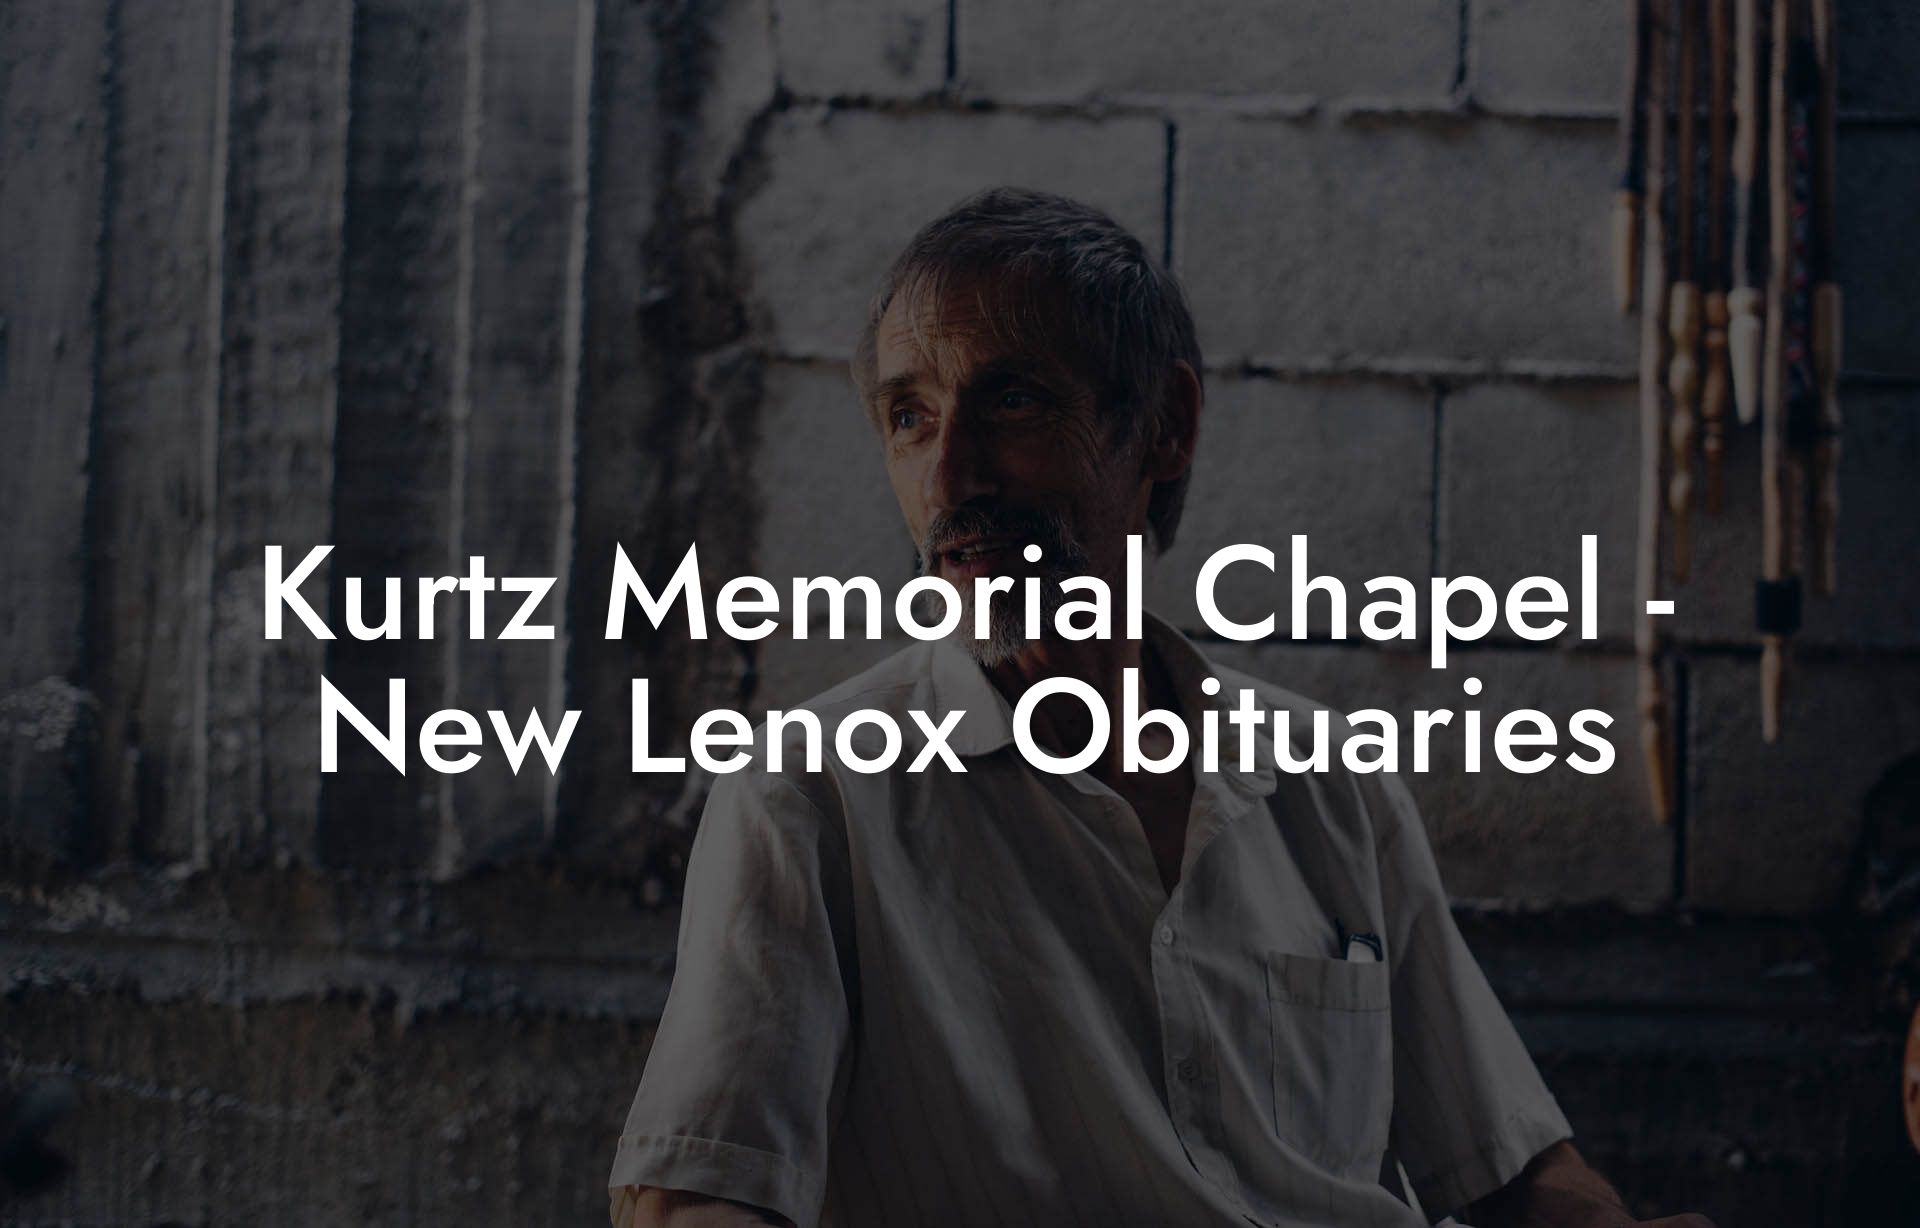 Kurtz Memorial Chapel - New Lenox Obituaries